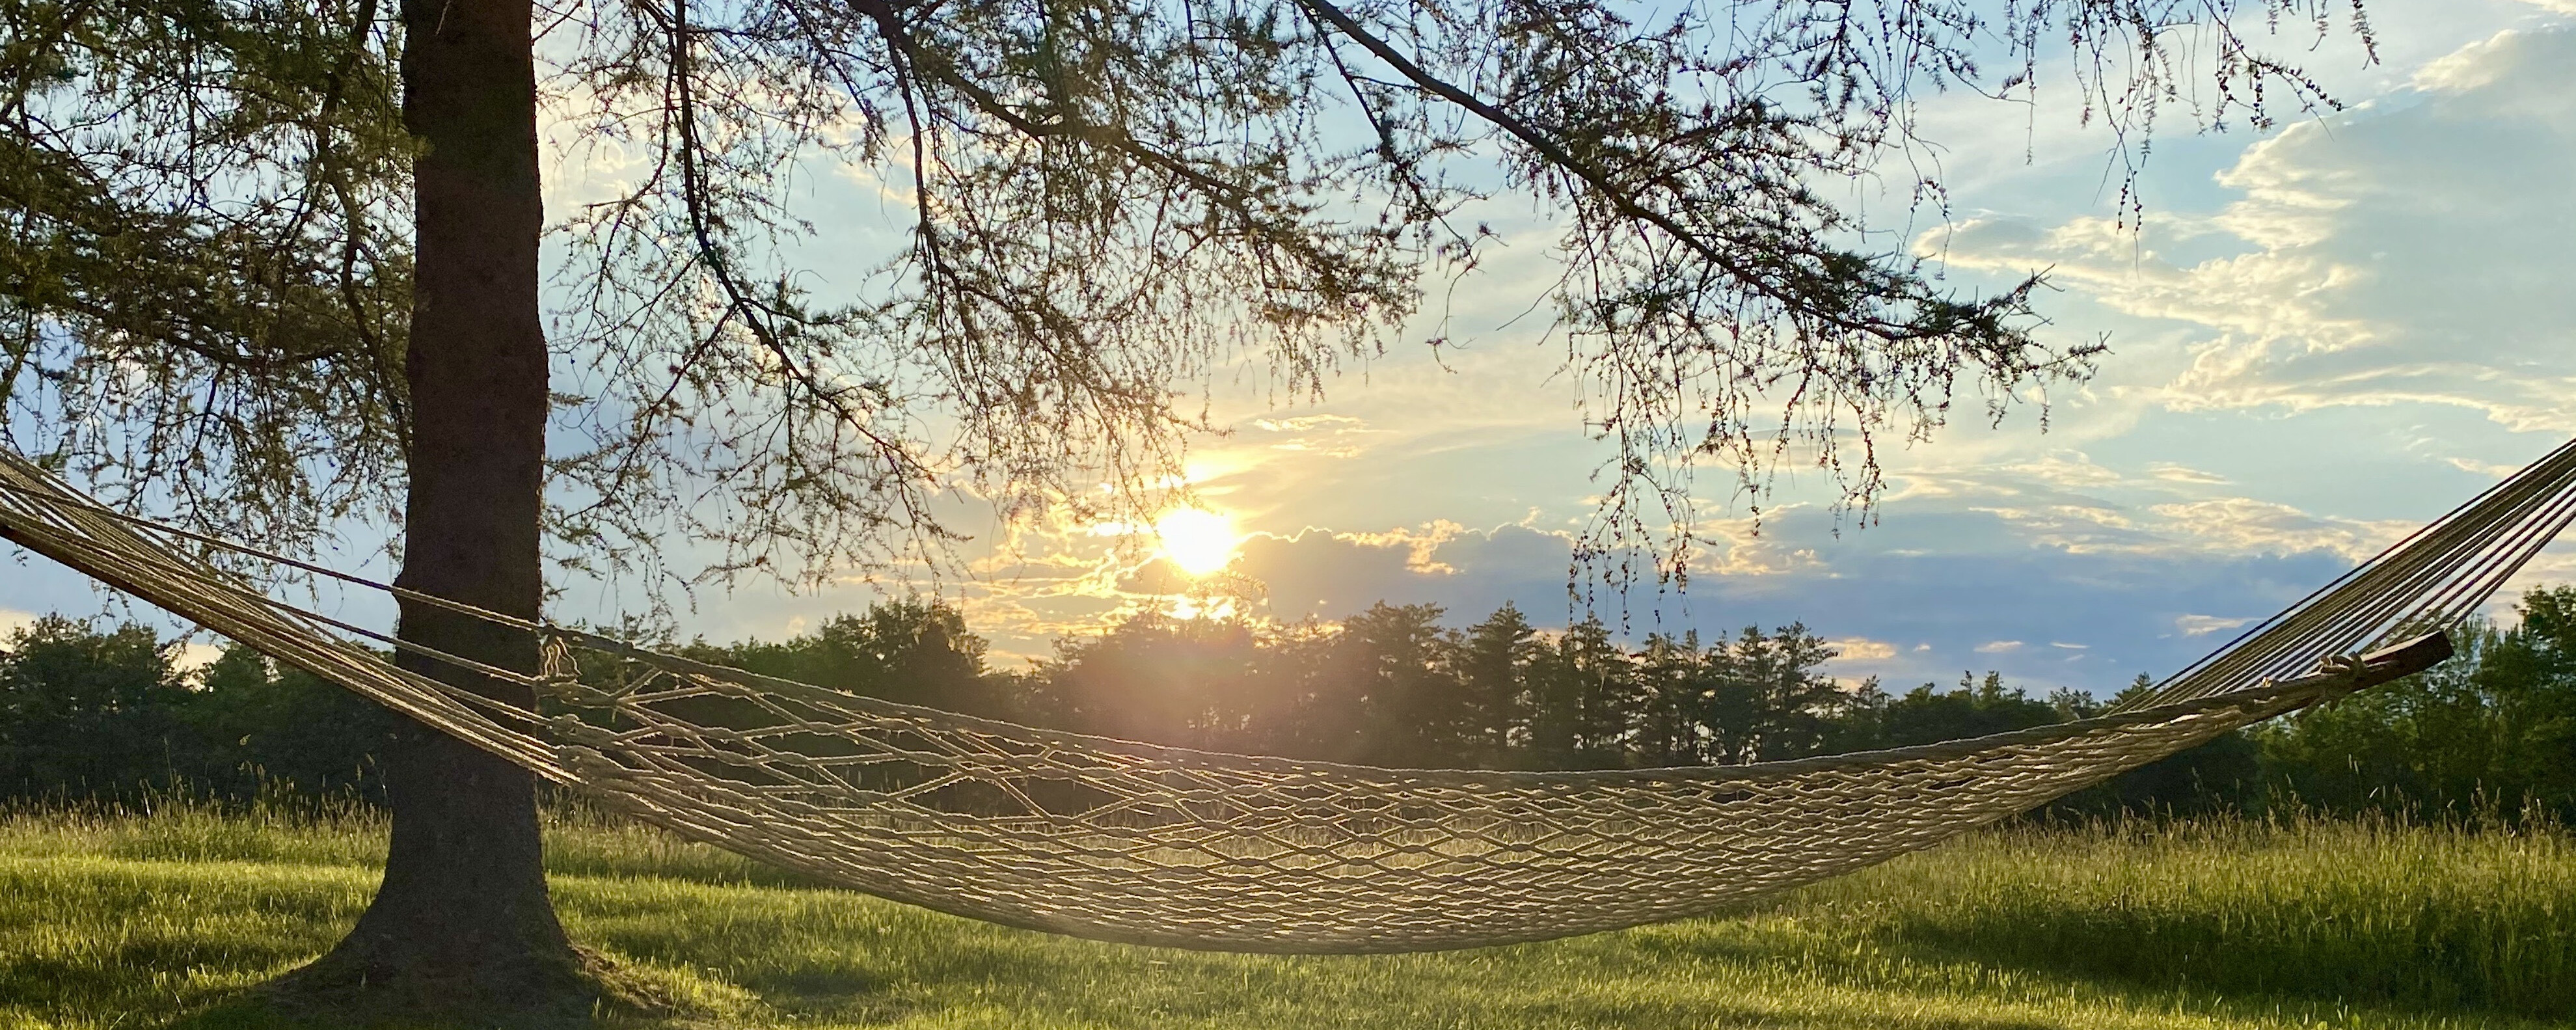 hammock and sunset